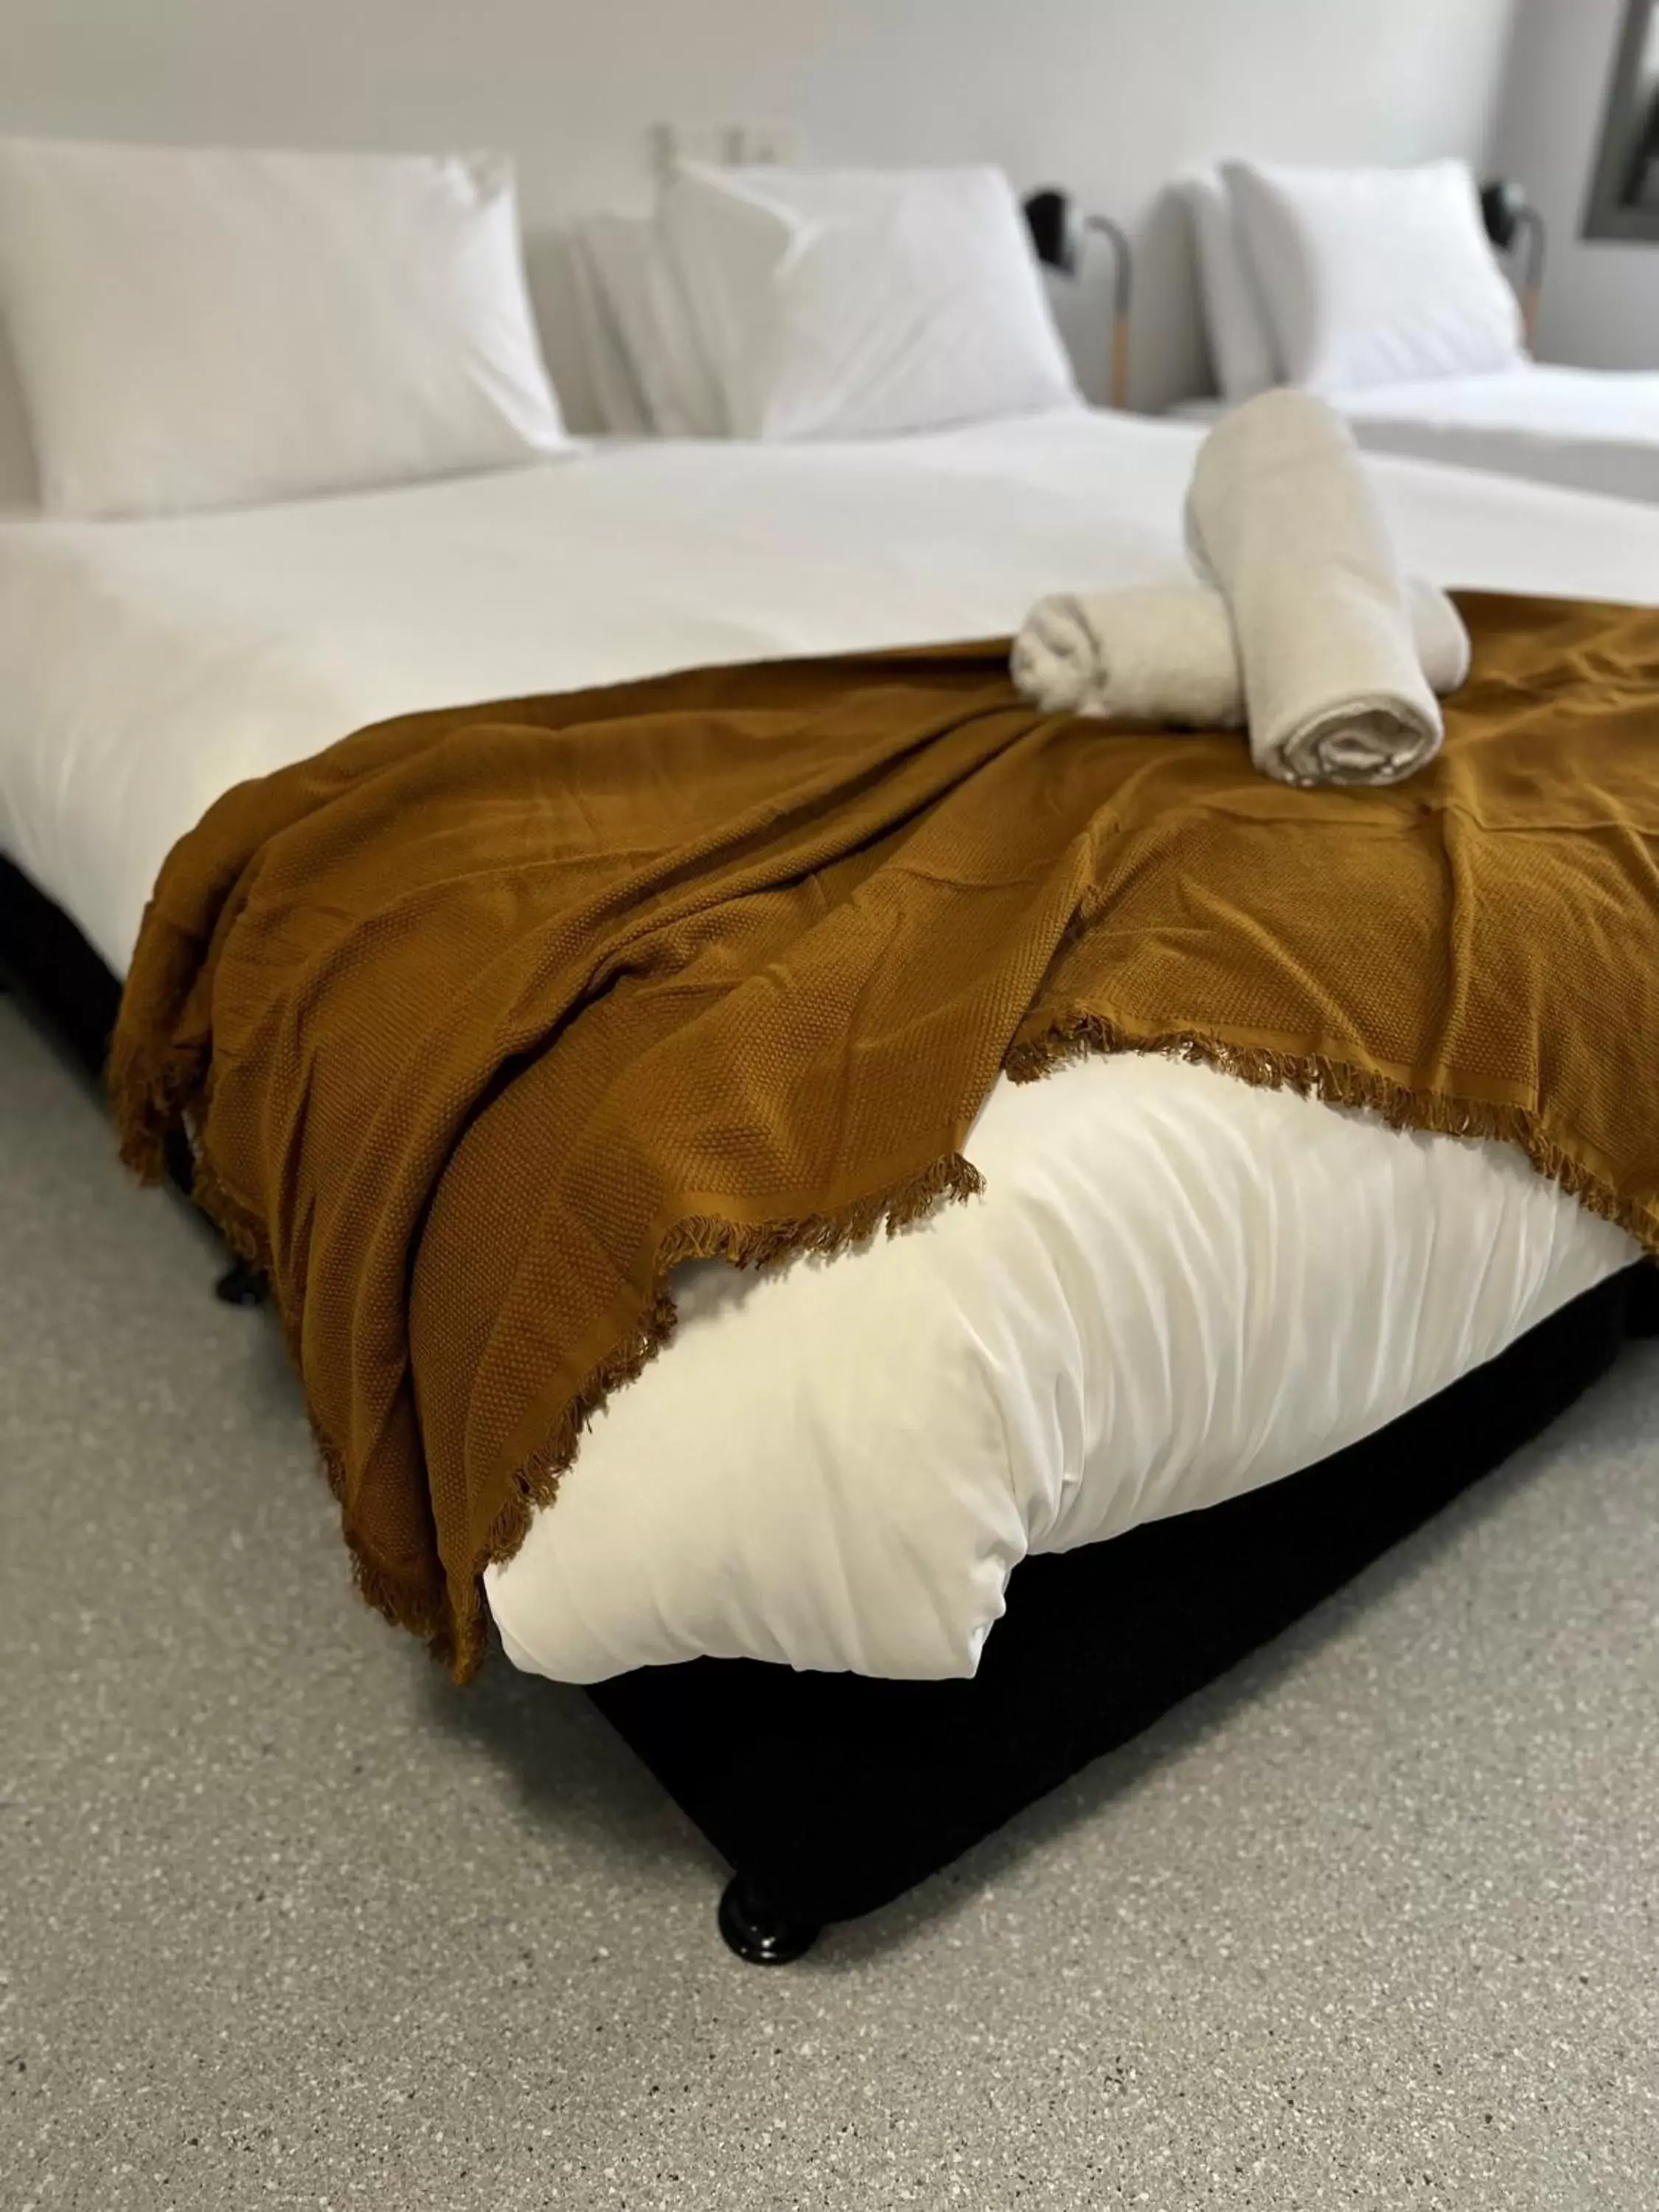 Bed in Comfort Inn Centrepoint Motel